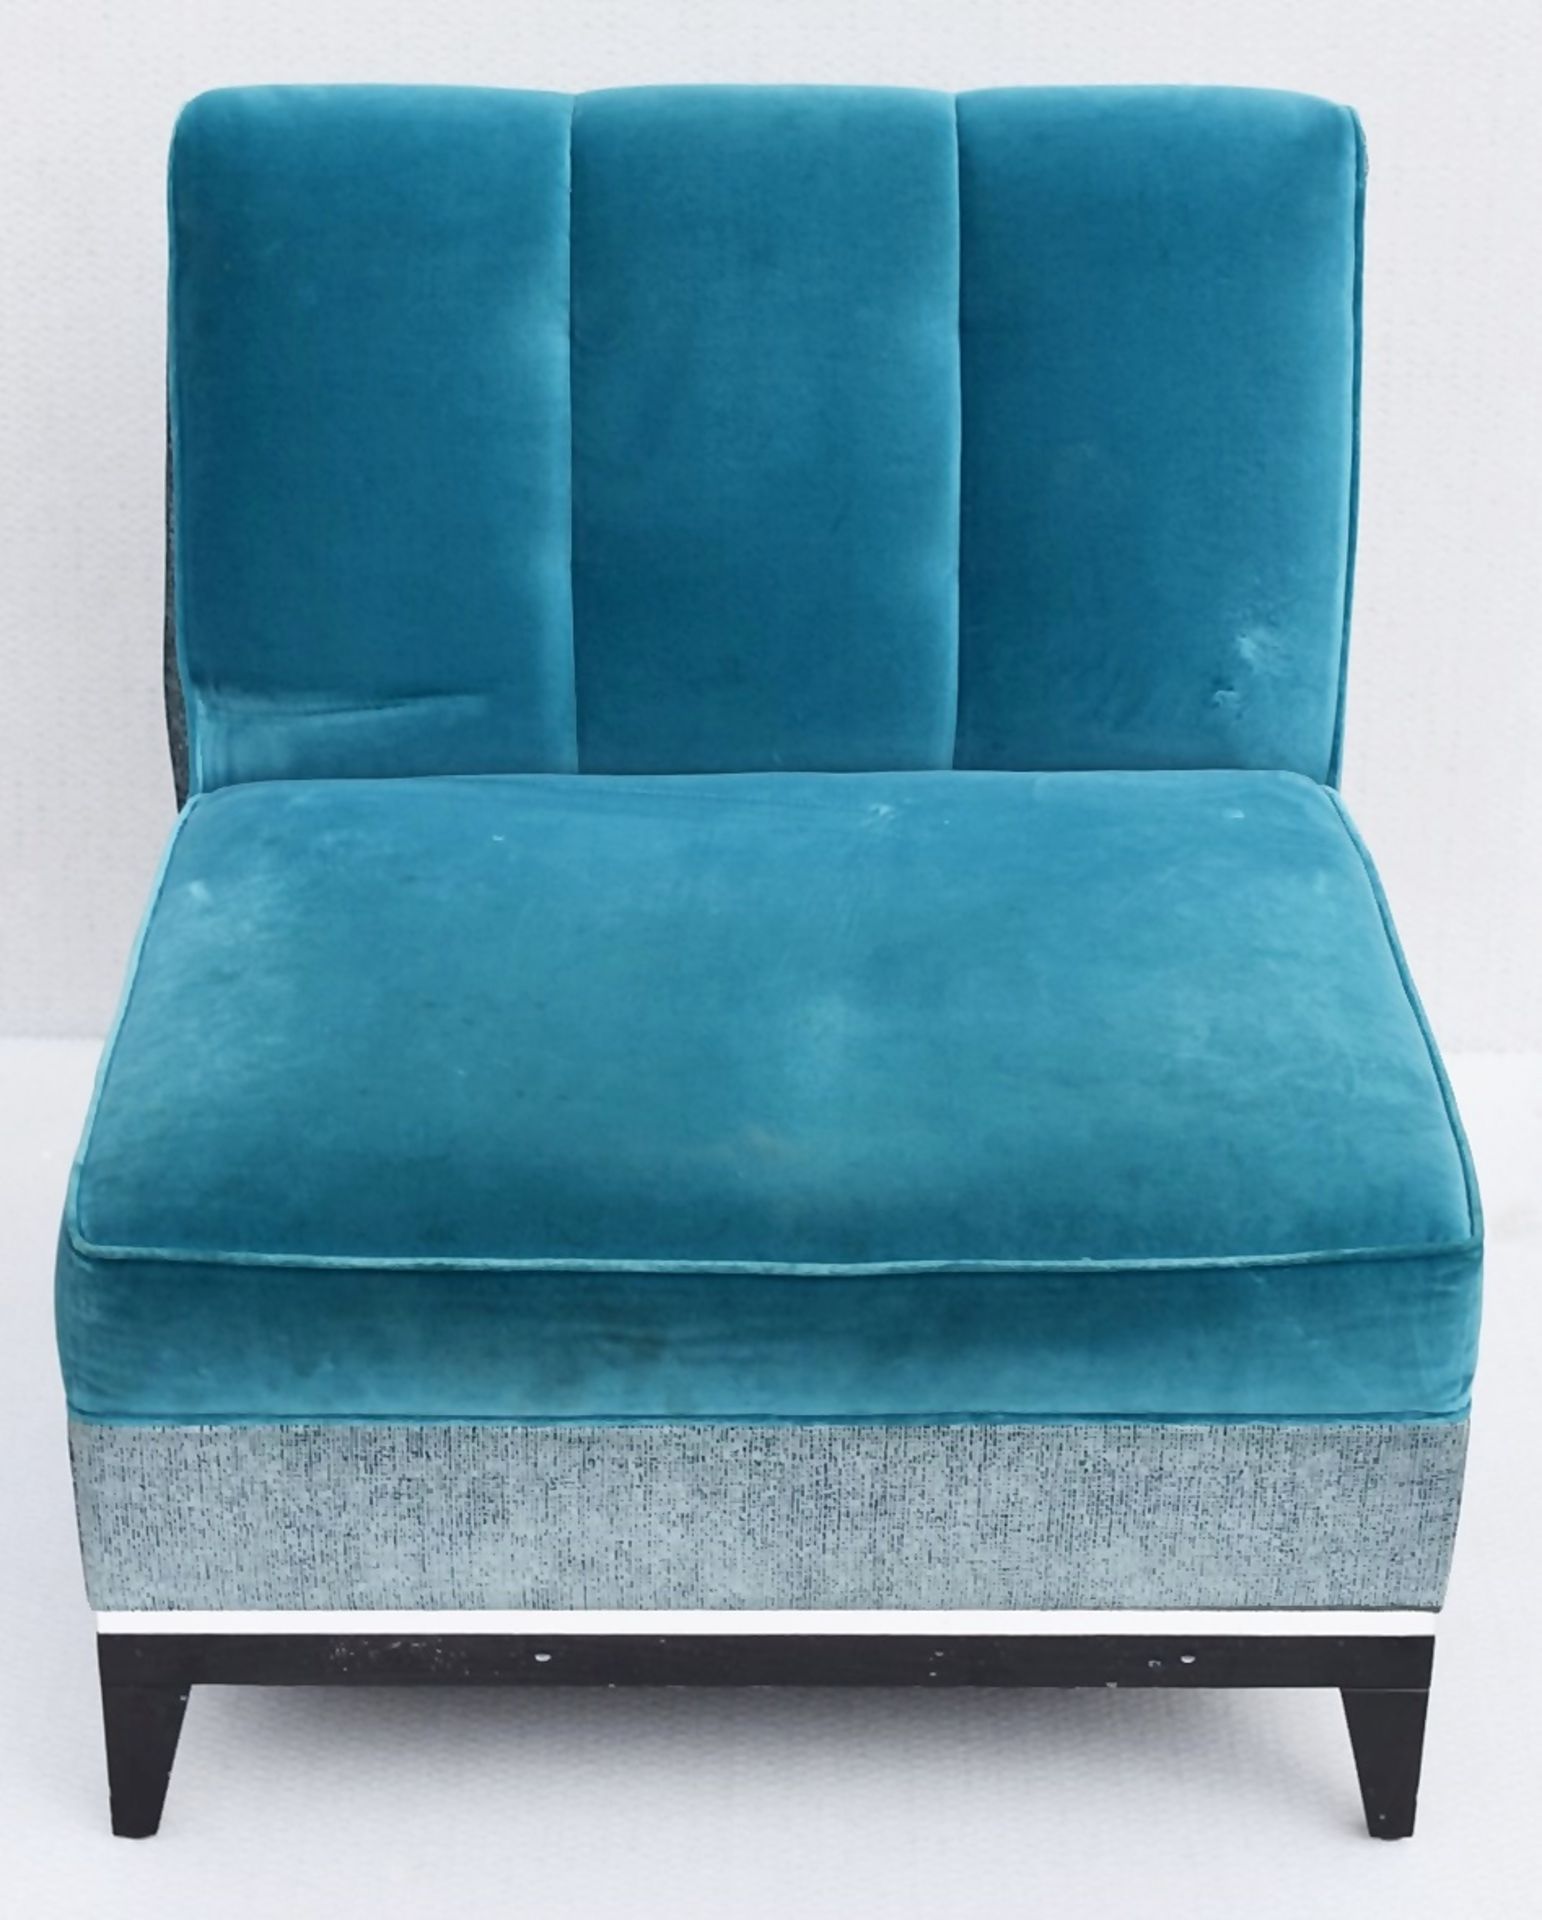 1 x Large Blue Velvet Upholstered Armchair - Ref: HBK501 / WH2 - CL987 - Location: Altrincham WA14*